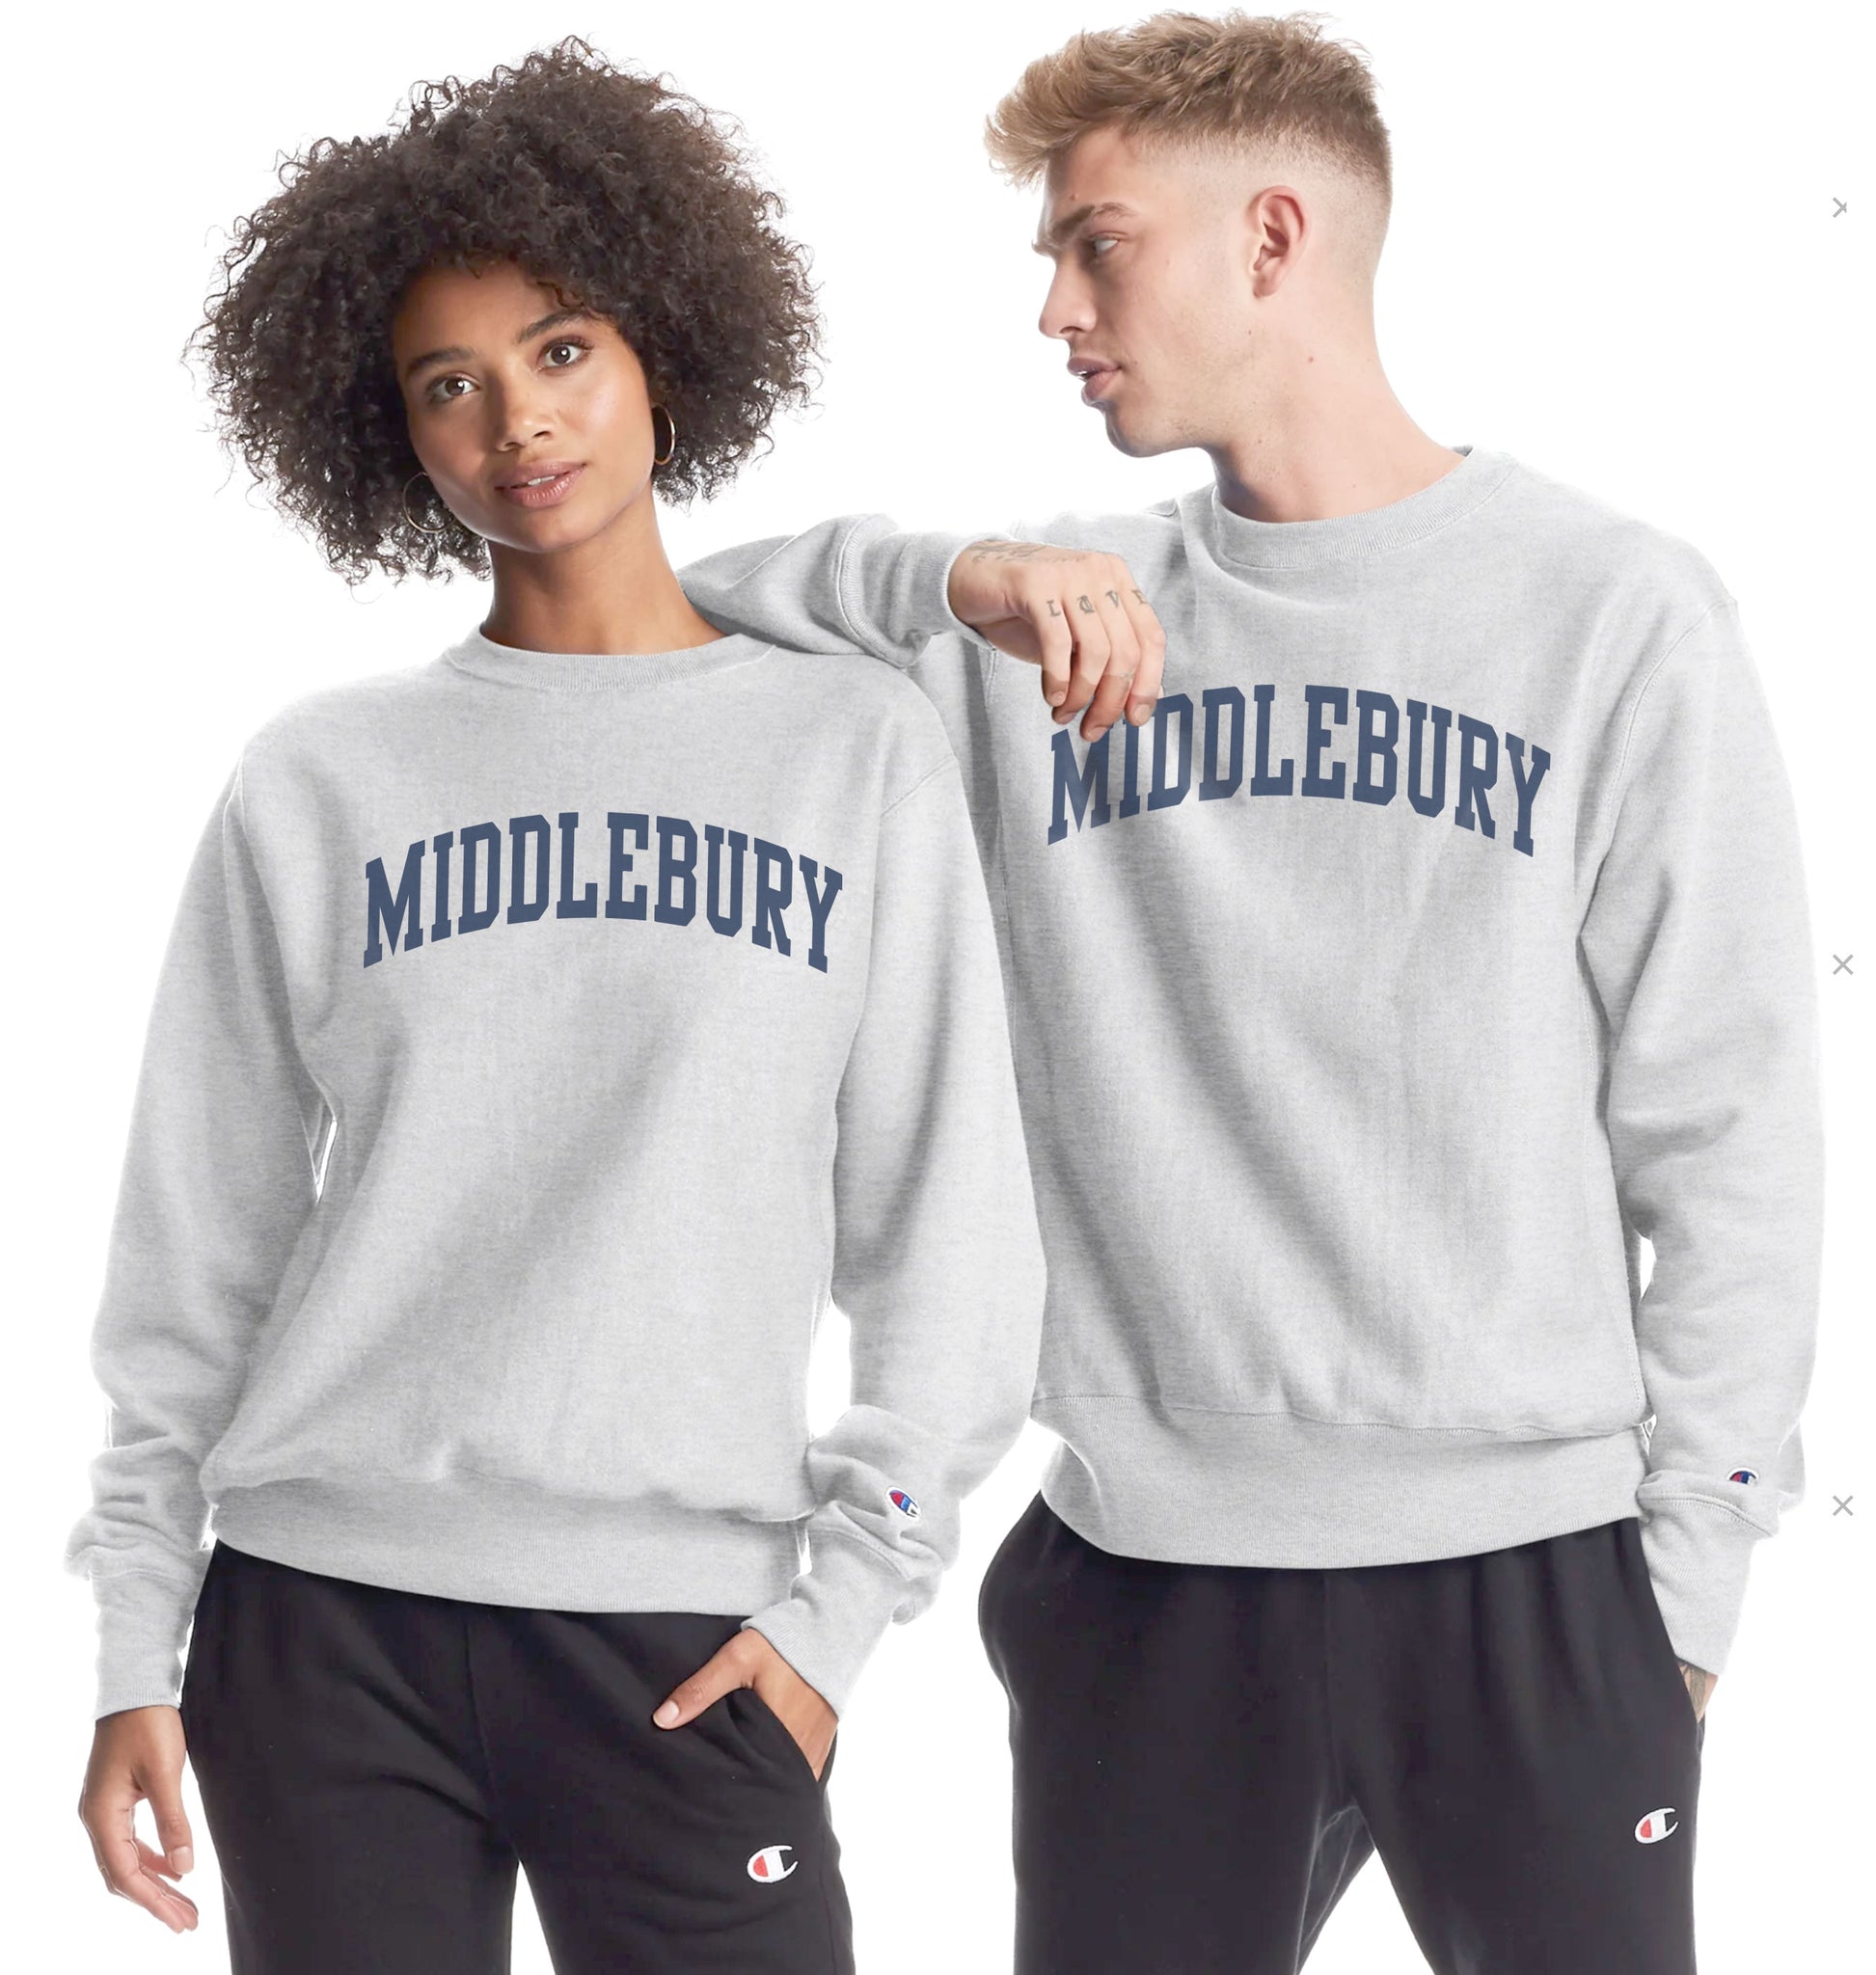 Middlebury Reverse Weave Crew Neck Sweatshirt (Silver Grey)